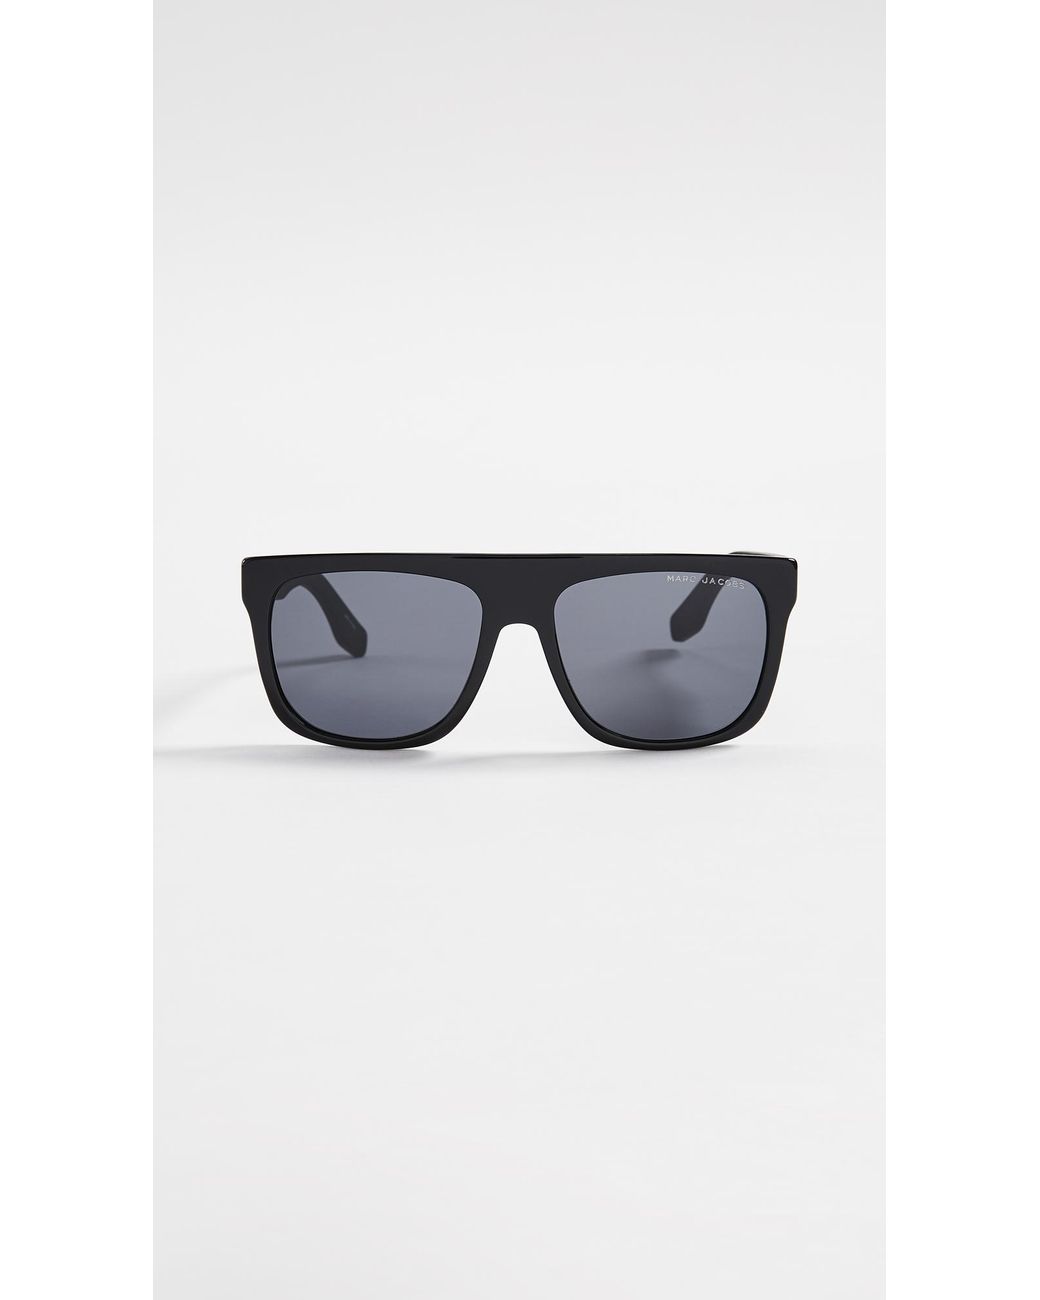 Marc Jacobs Sport Flat Top Sunglasses in Black | Lyst